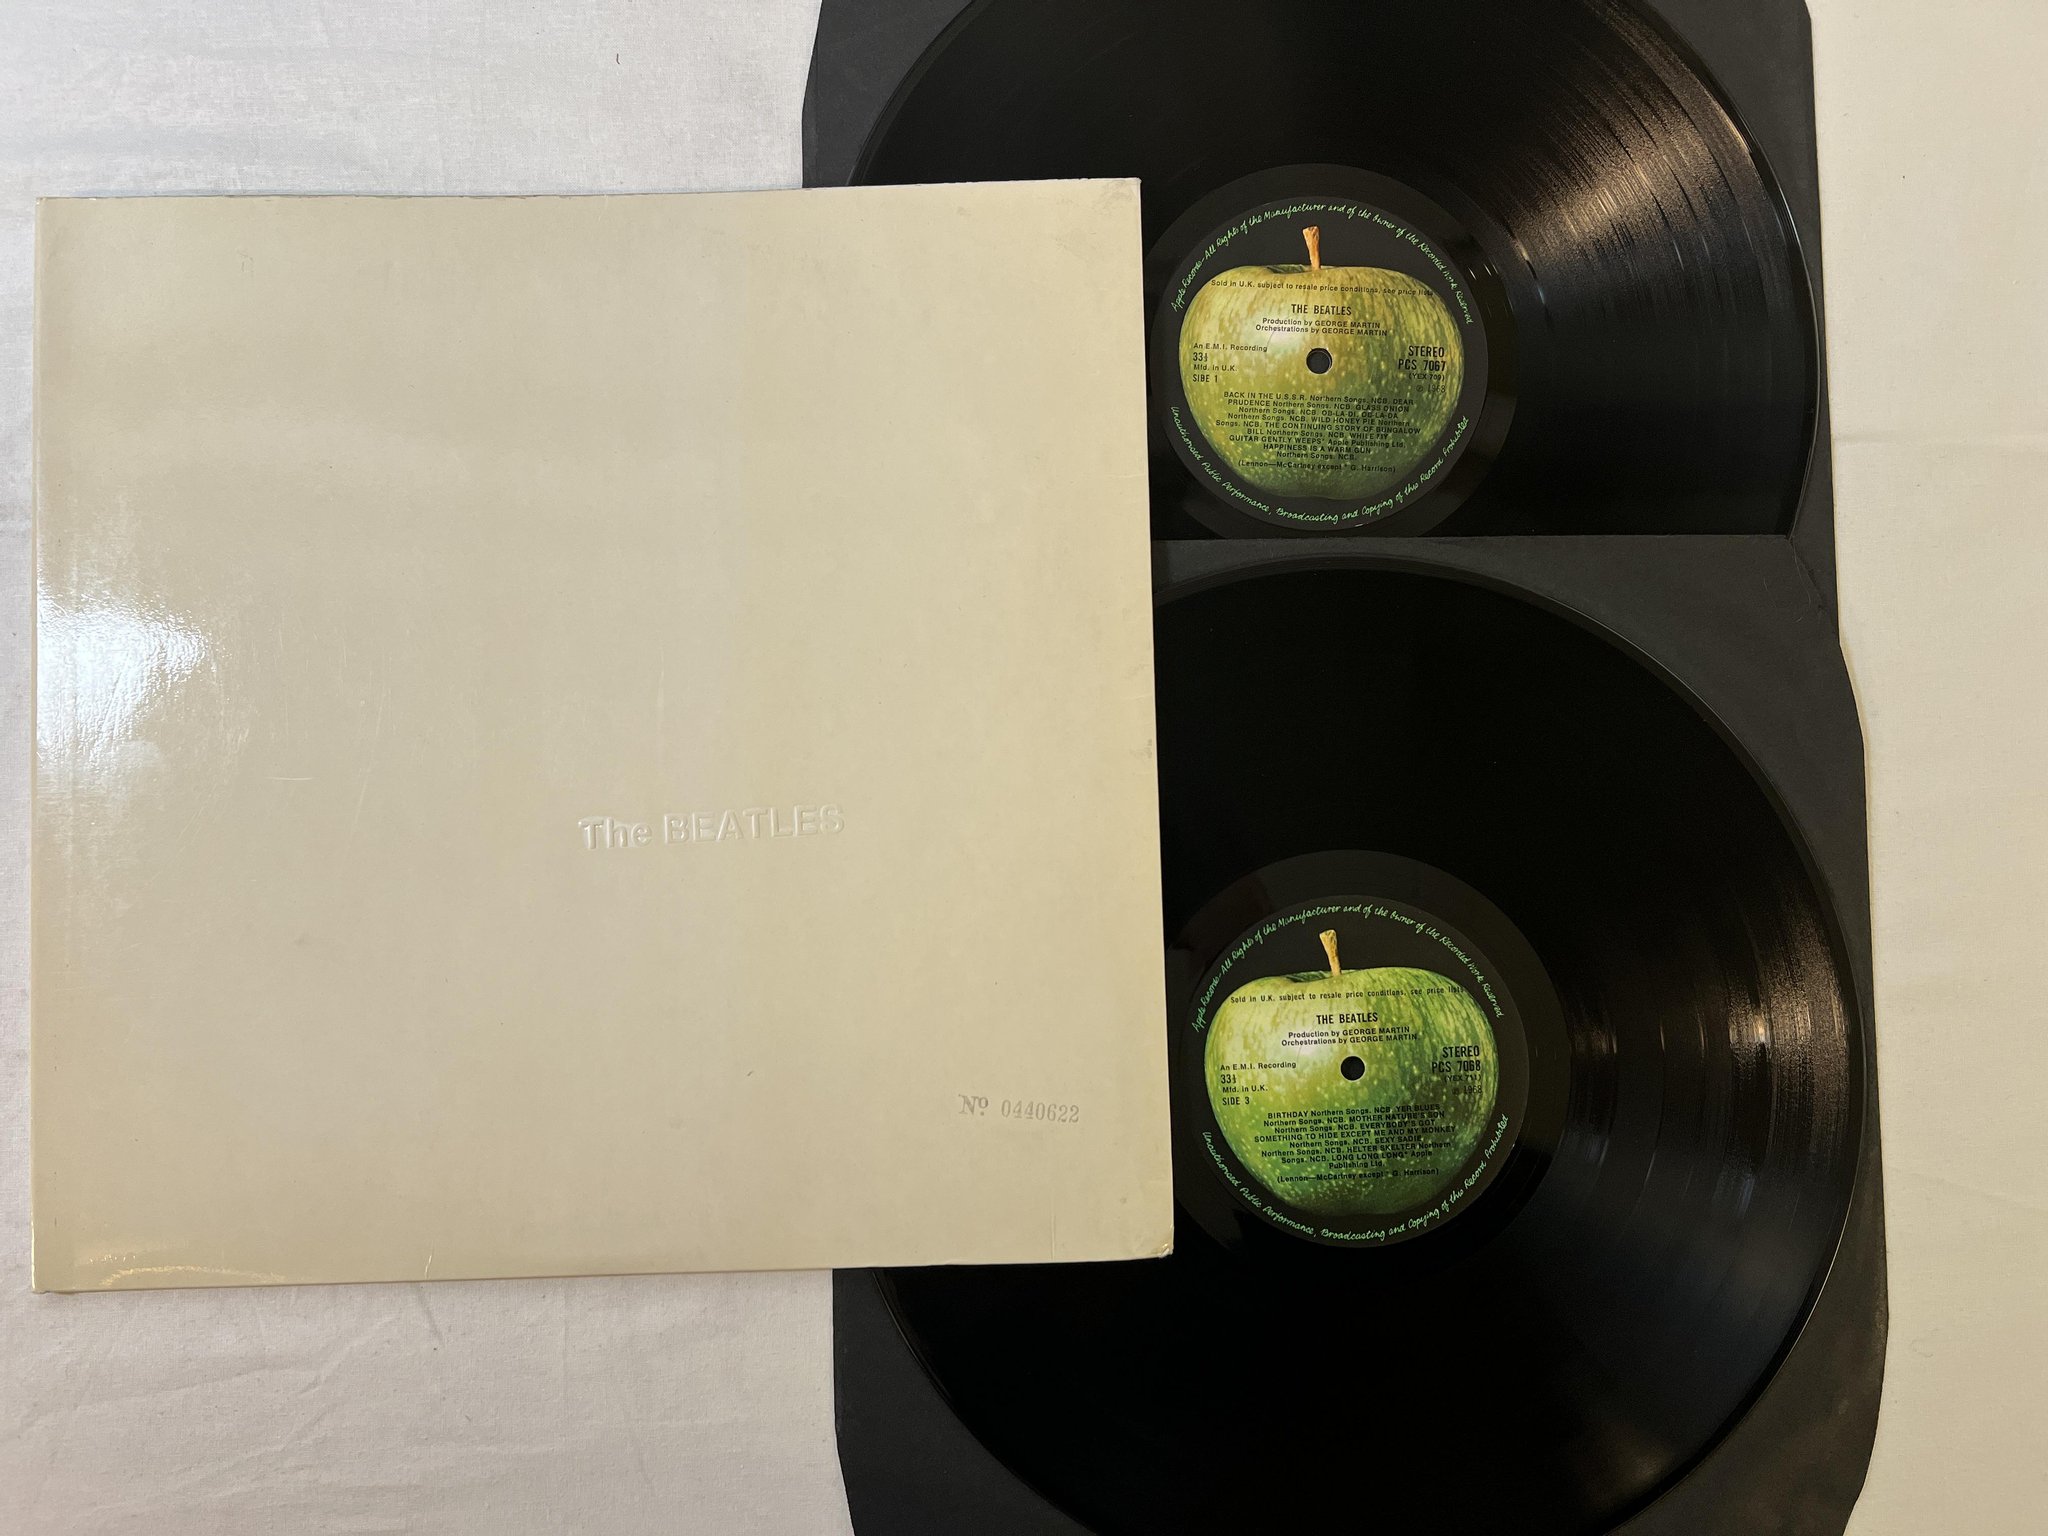 Omslagsbild för skivan THE BEATLES white album 2xLP -68 UK APPLE PCS 7068 complete #0440622